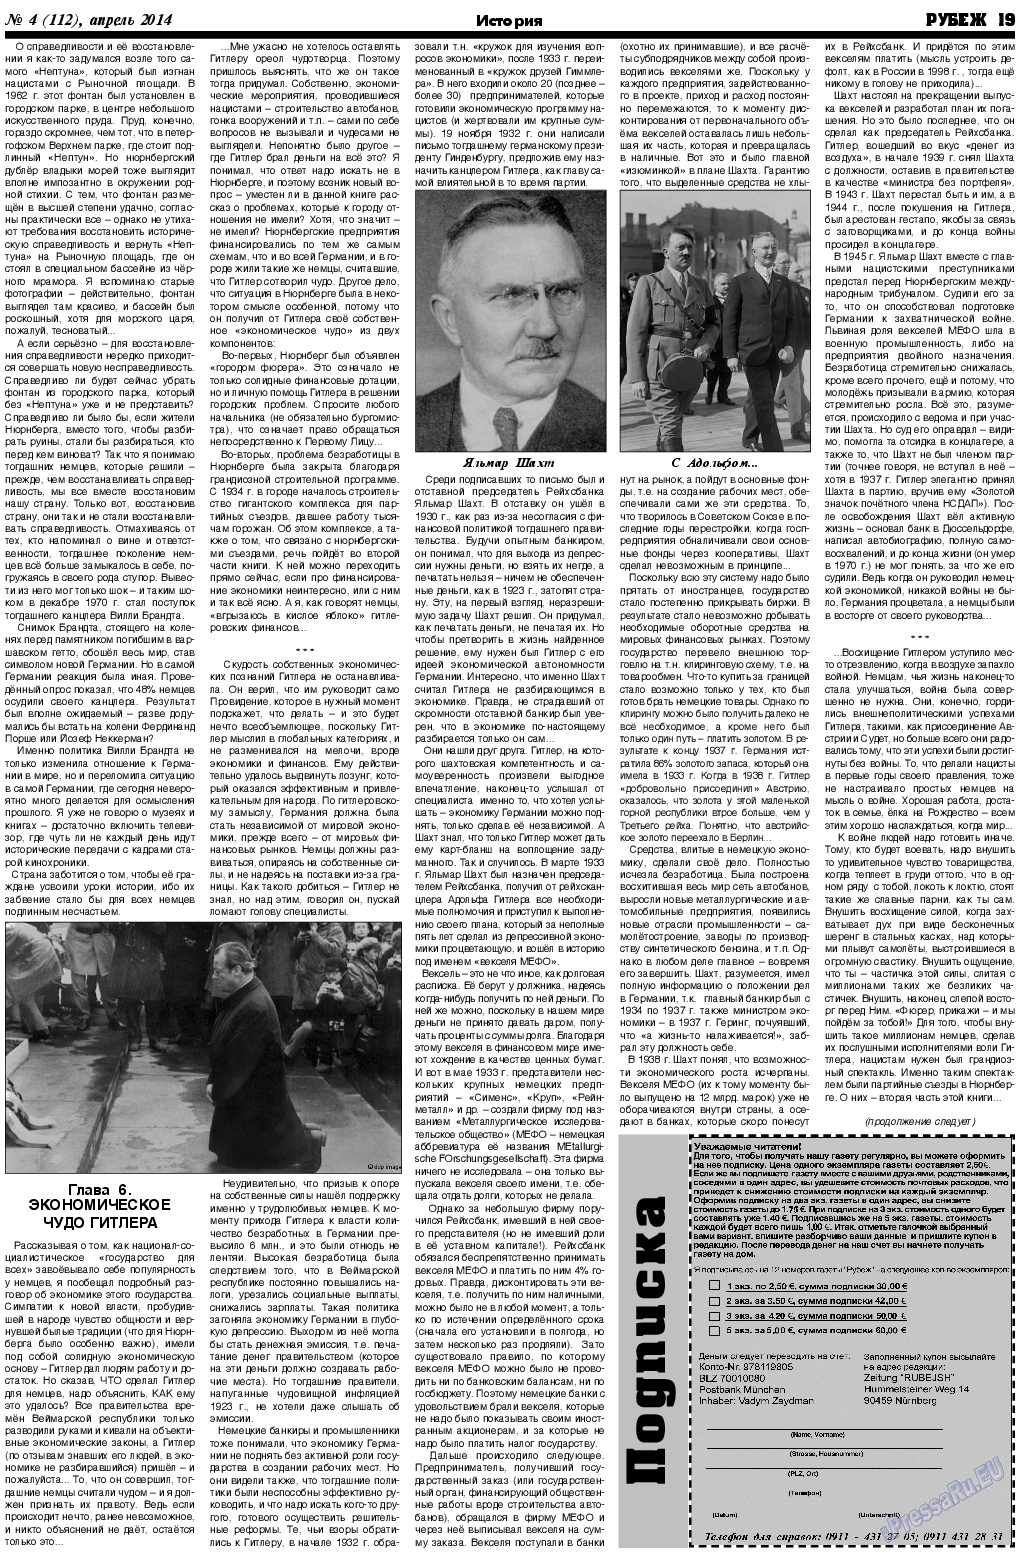 Рубеж, газета. 2014 №4 стр.19